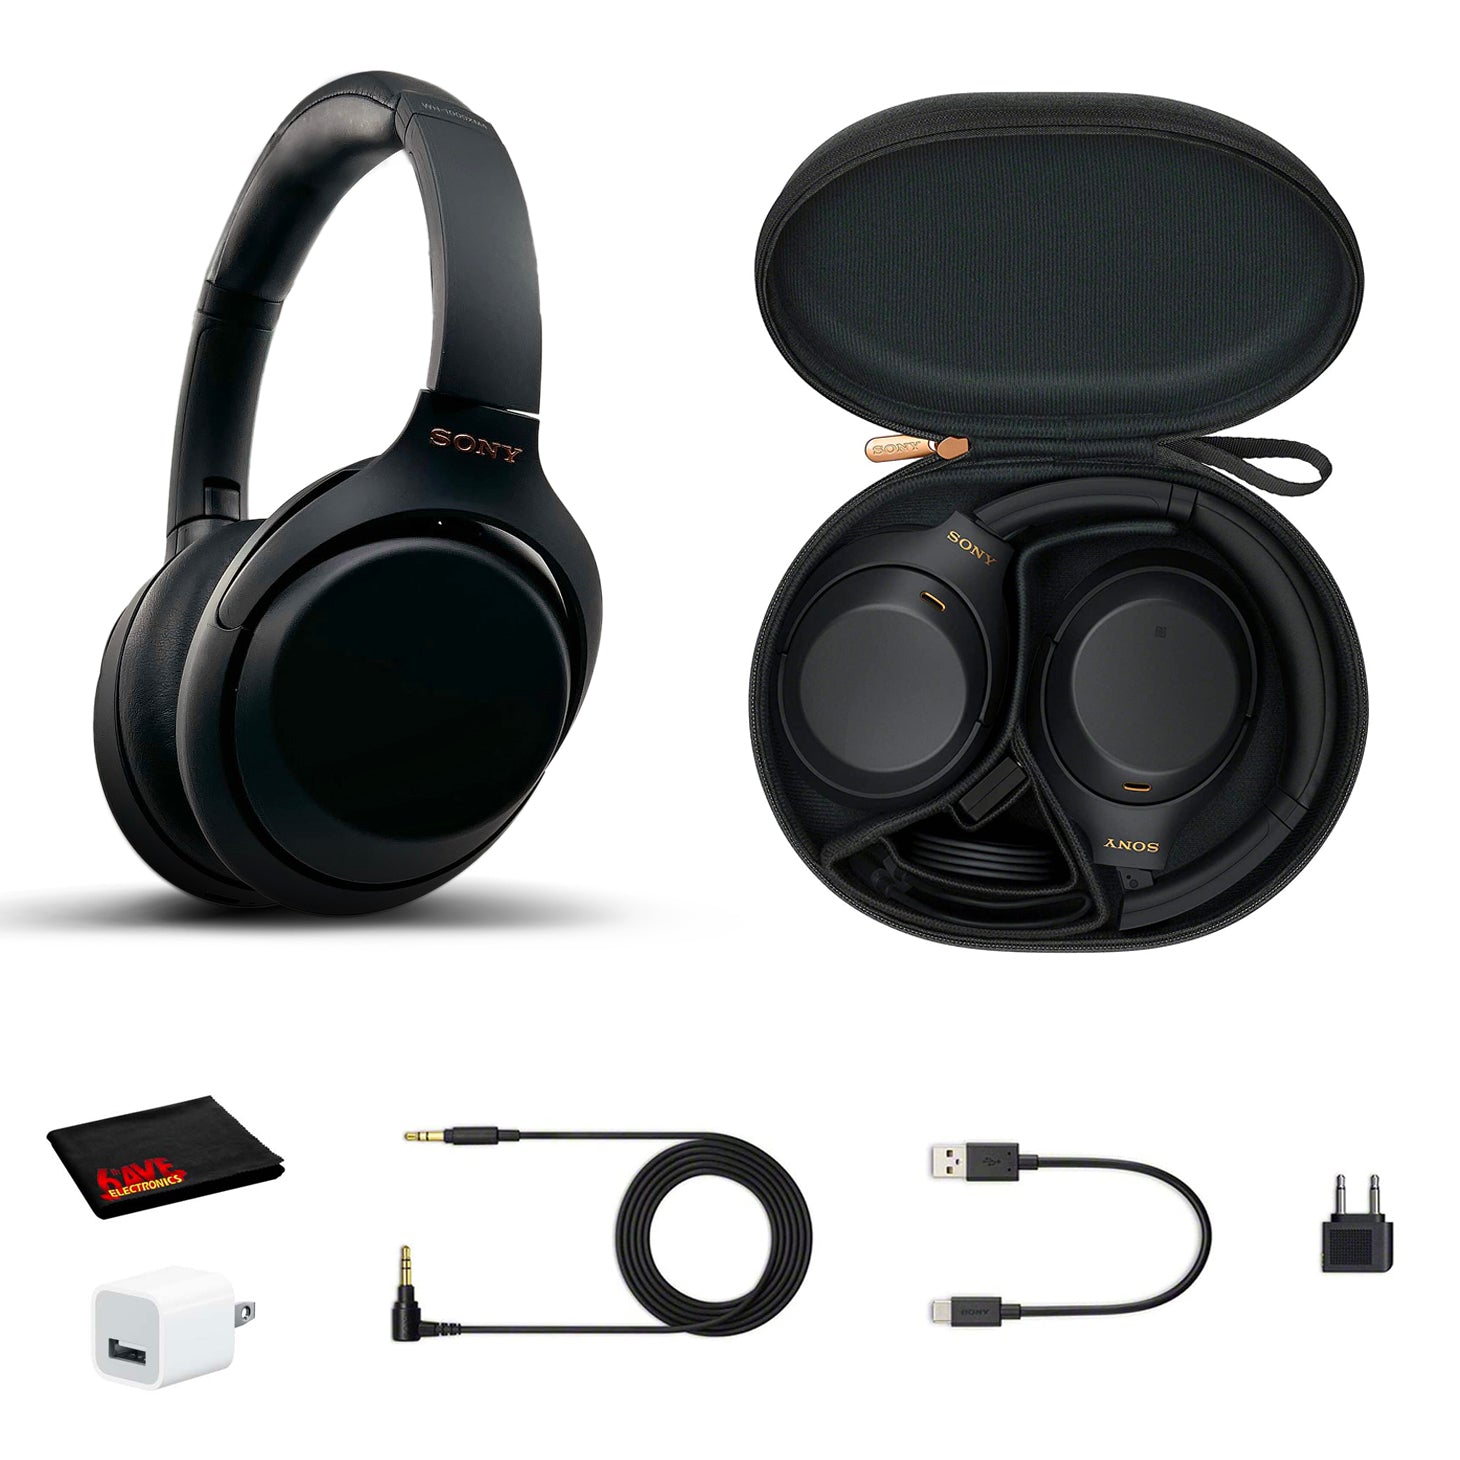 Sony WH-1000XM4 Wireless Noise Canceling Over Ear Headphones Black White